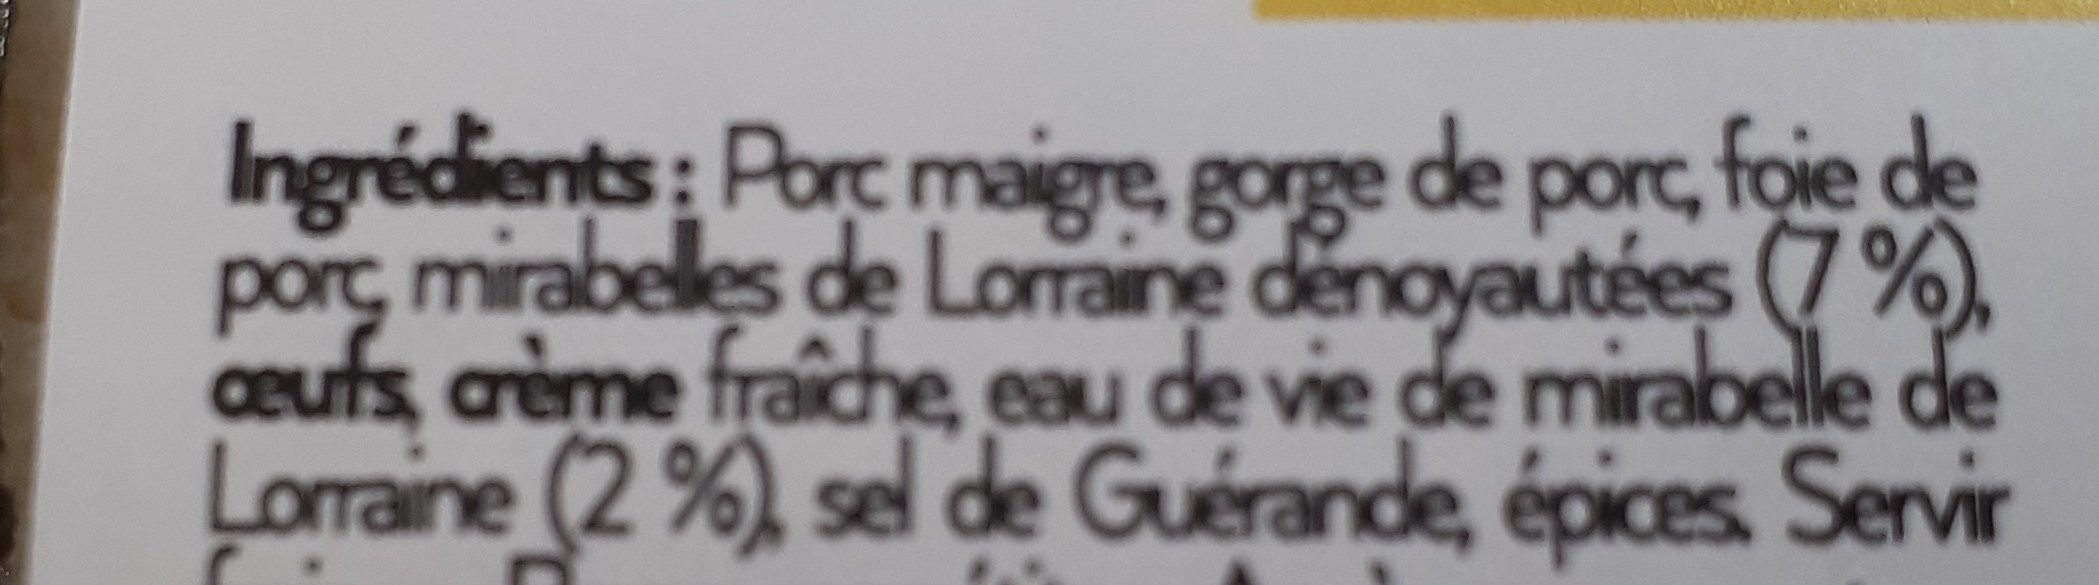 Terrine aux mirabelles de Lorraine - Ingredients - fr